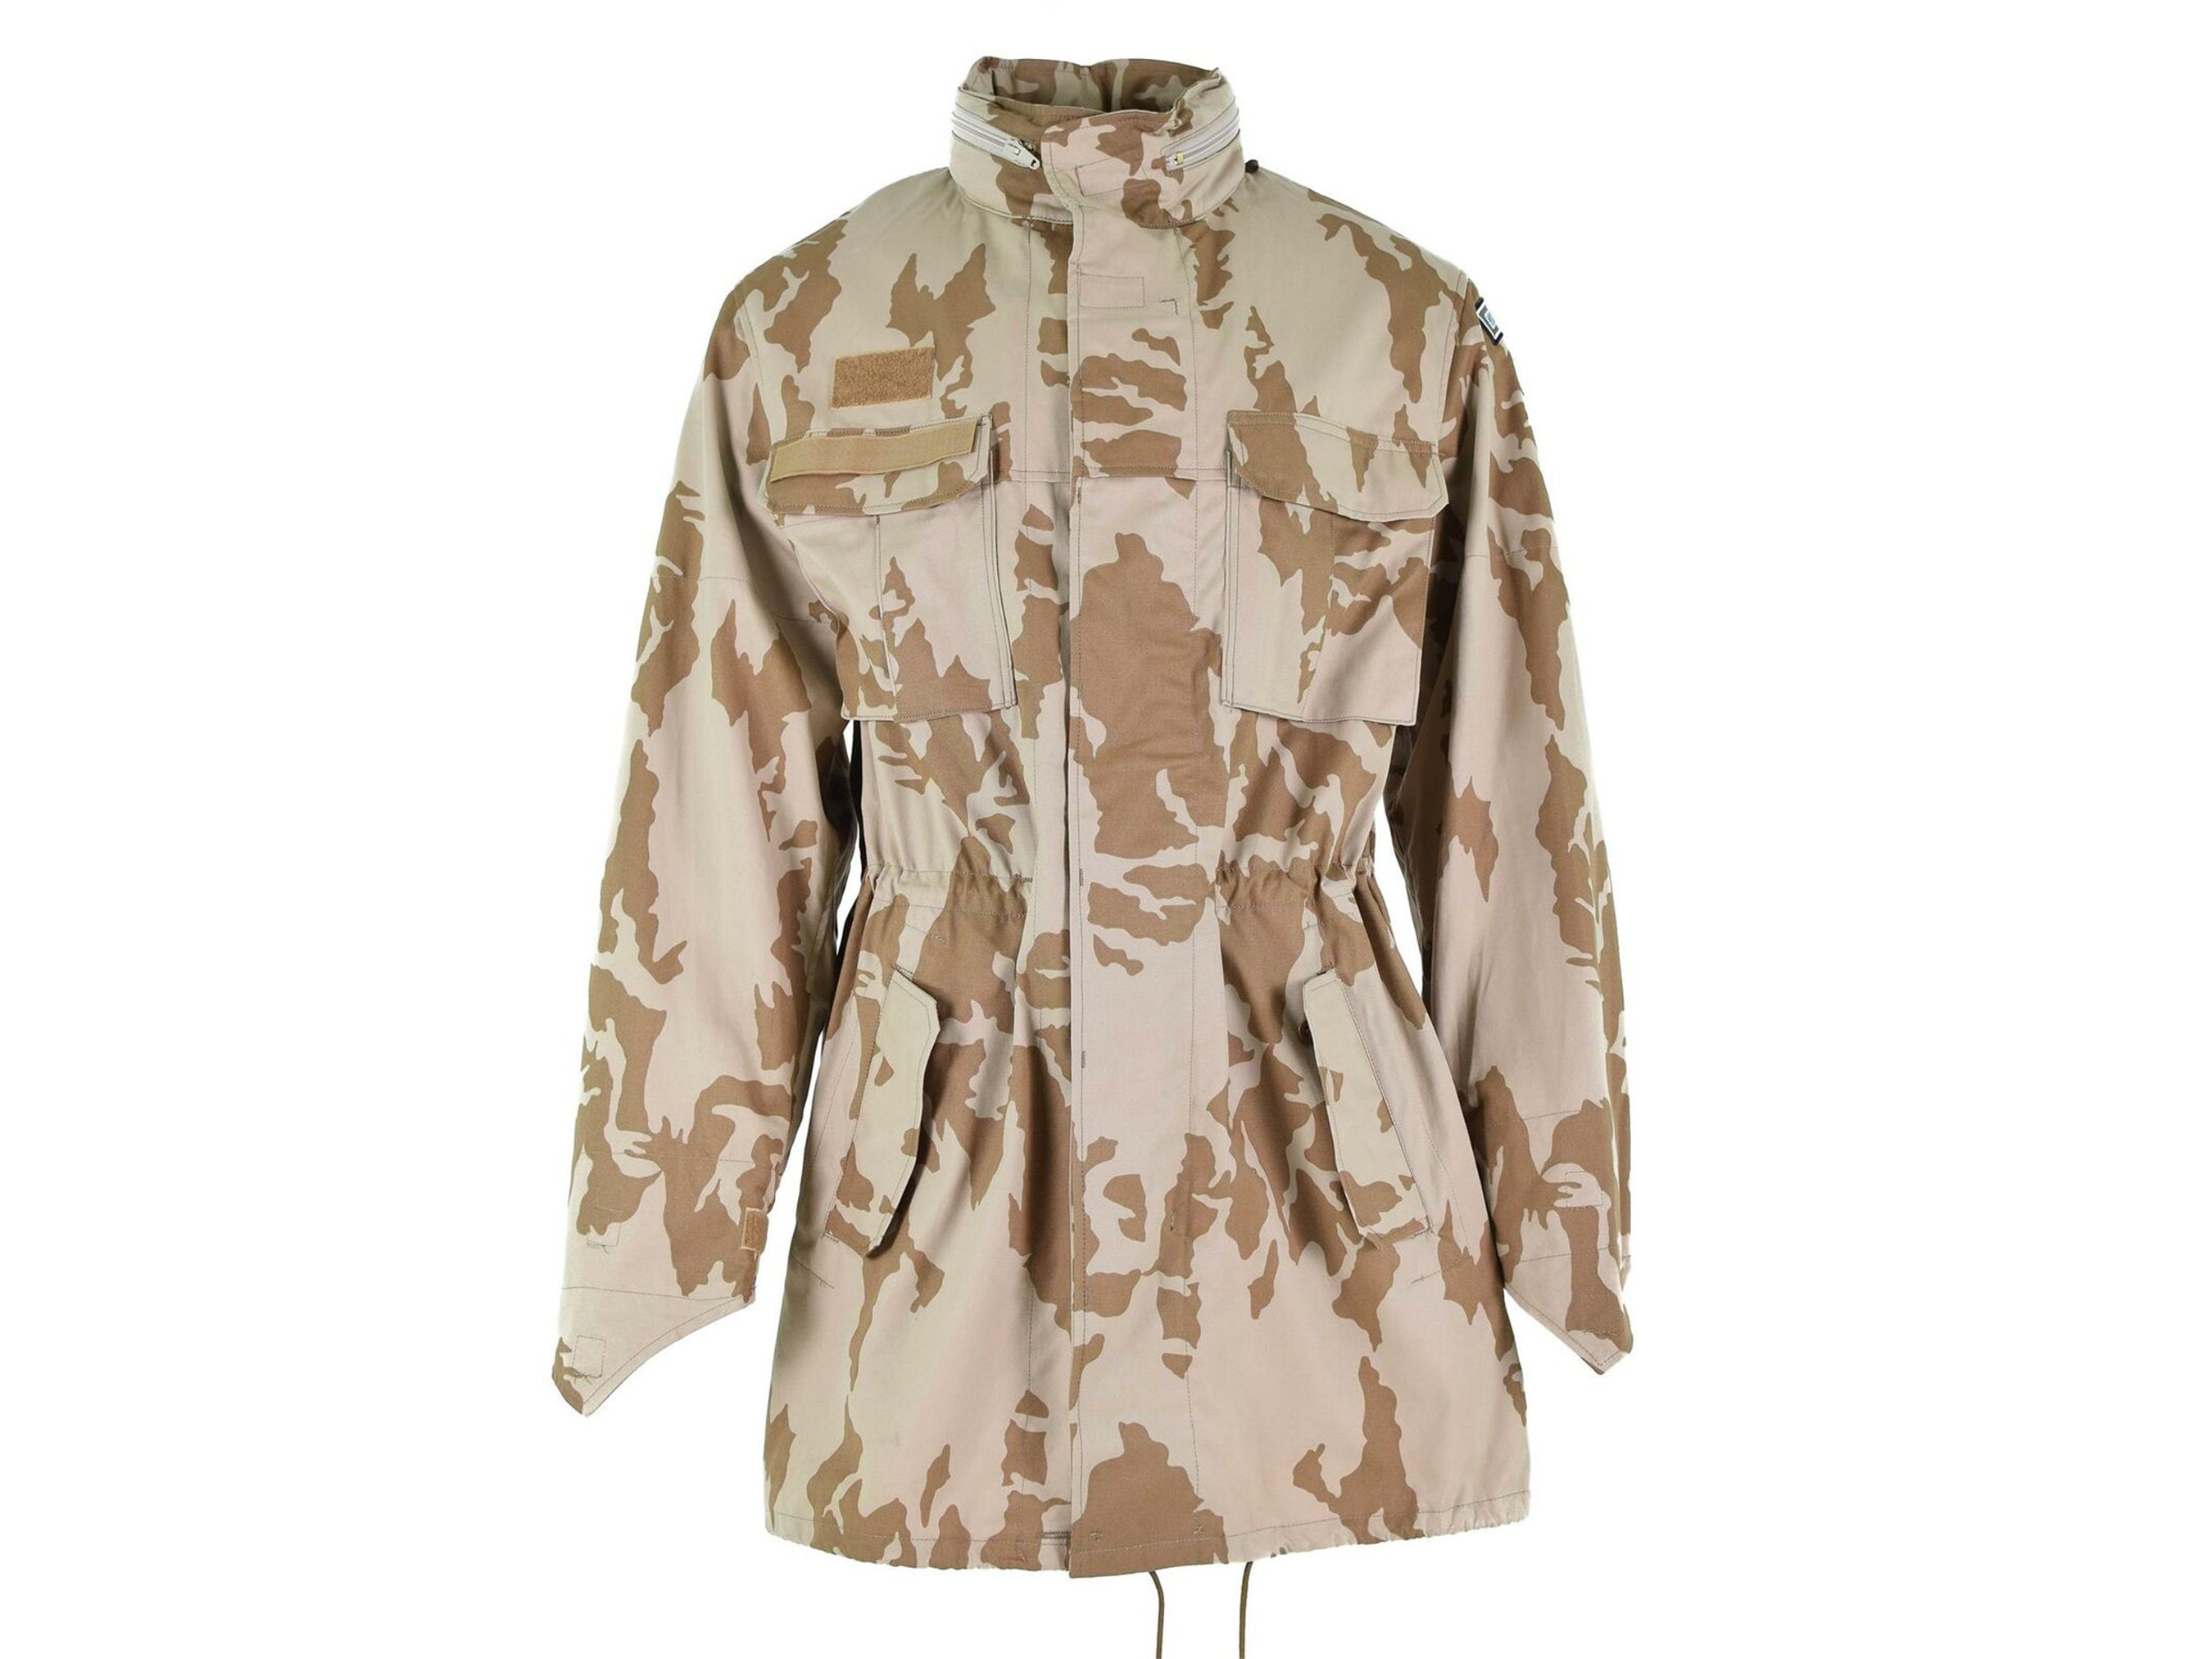 Original Czech army parka windproof jacket BDU desert camo military surplus  NEW